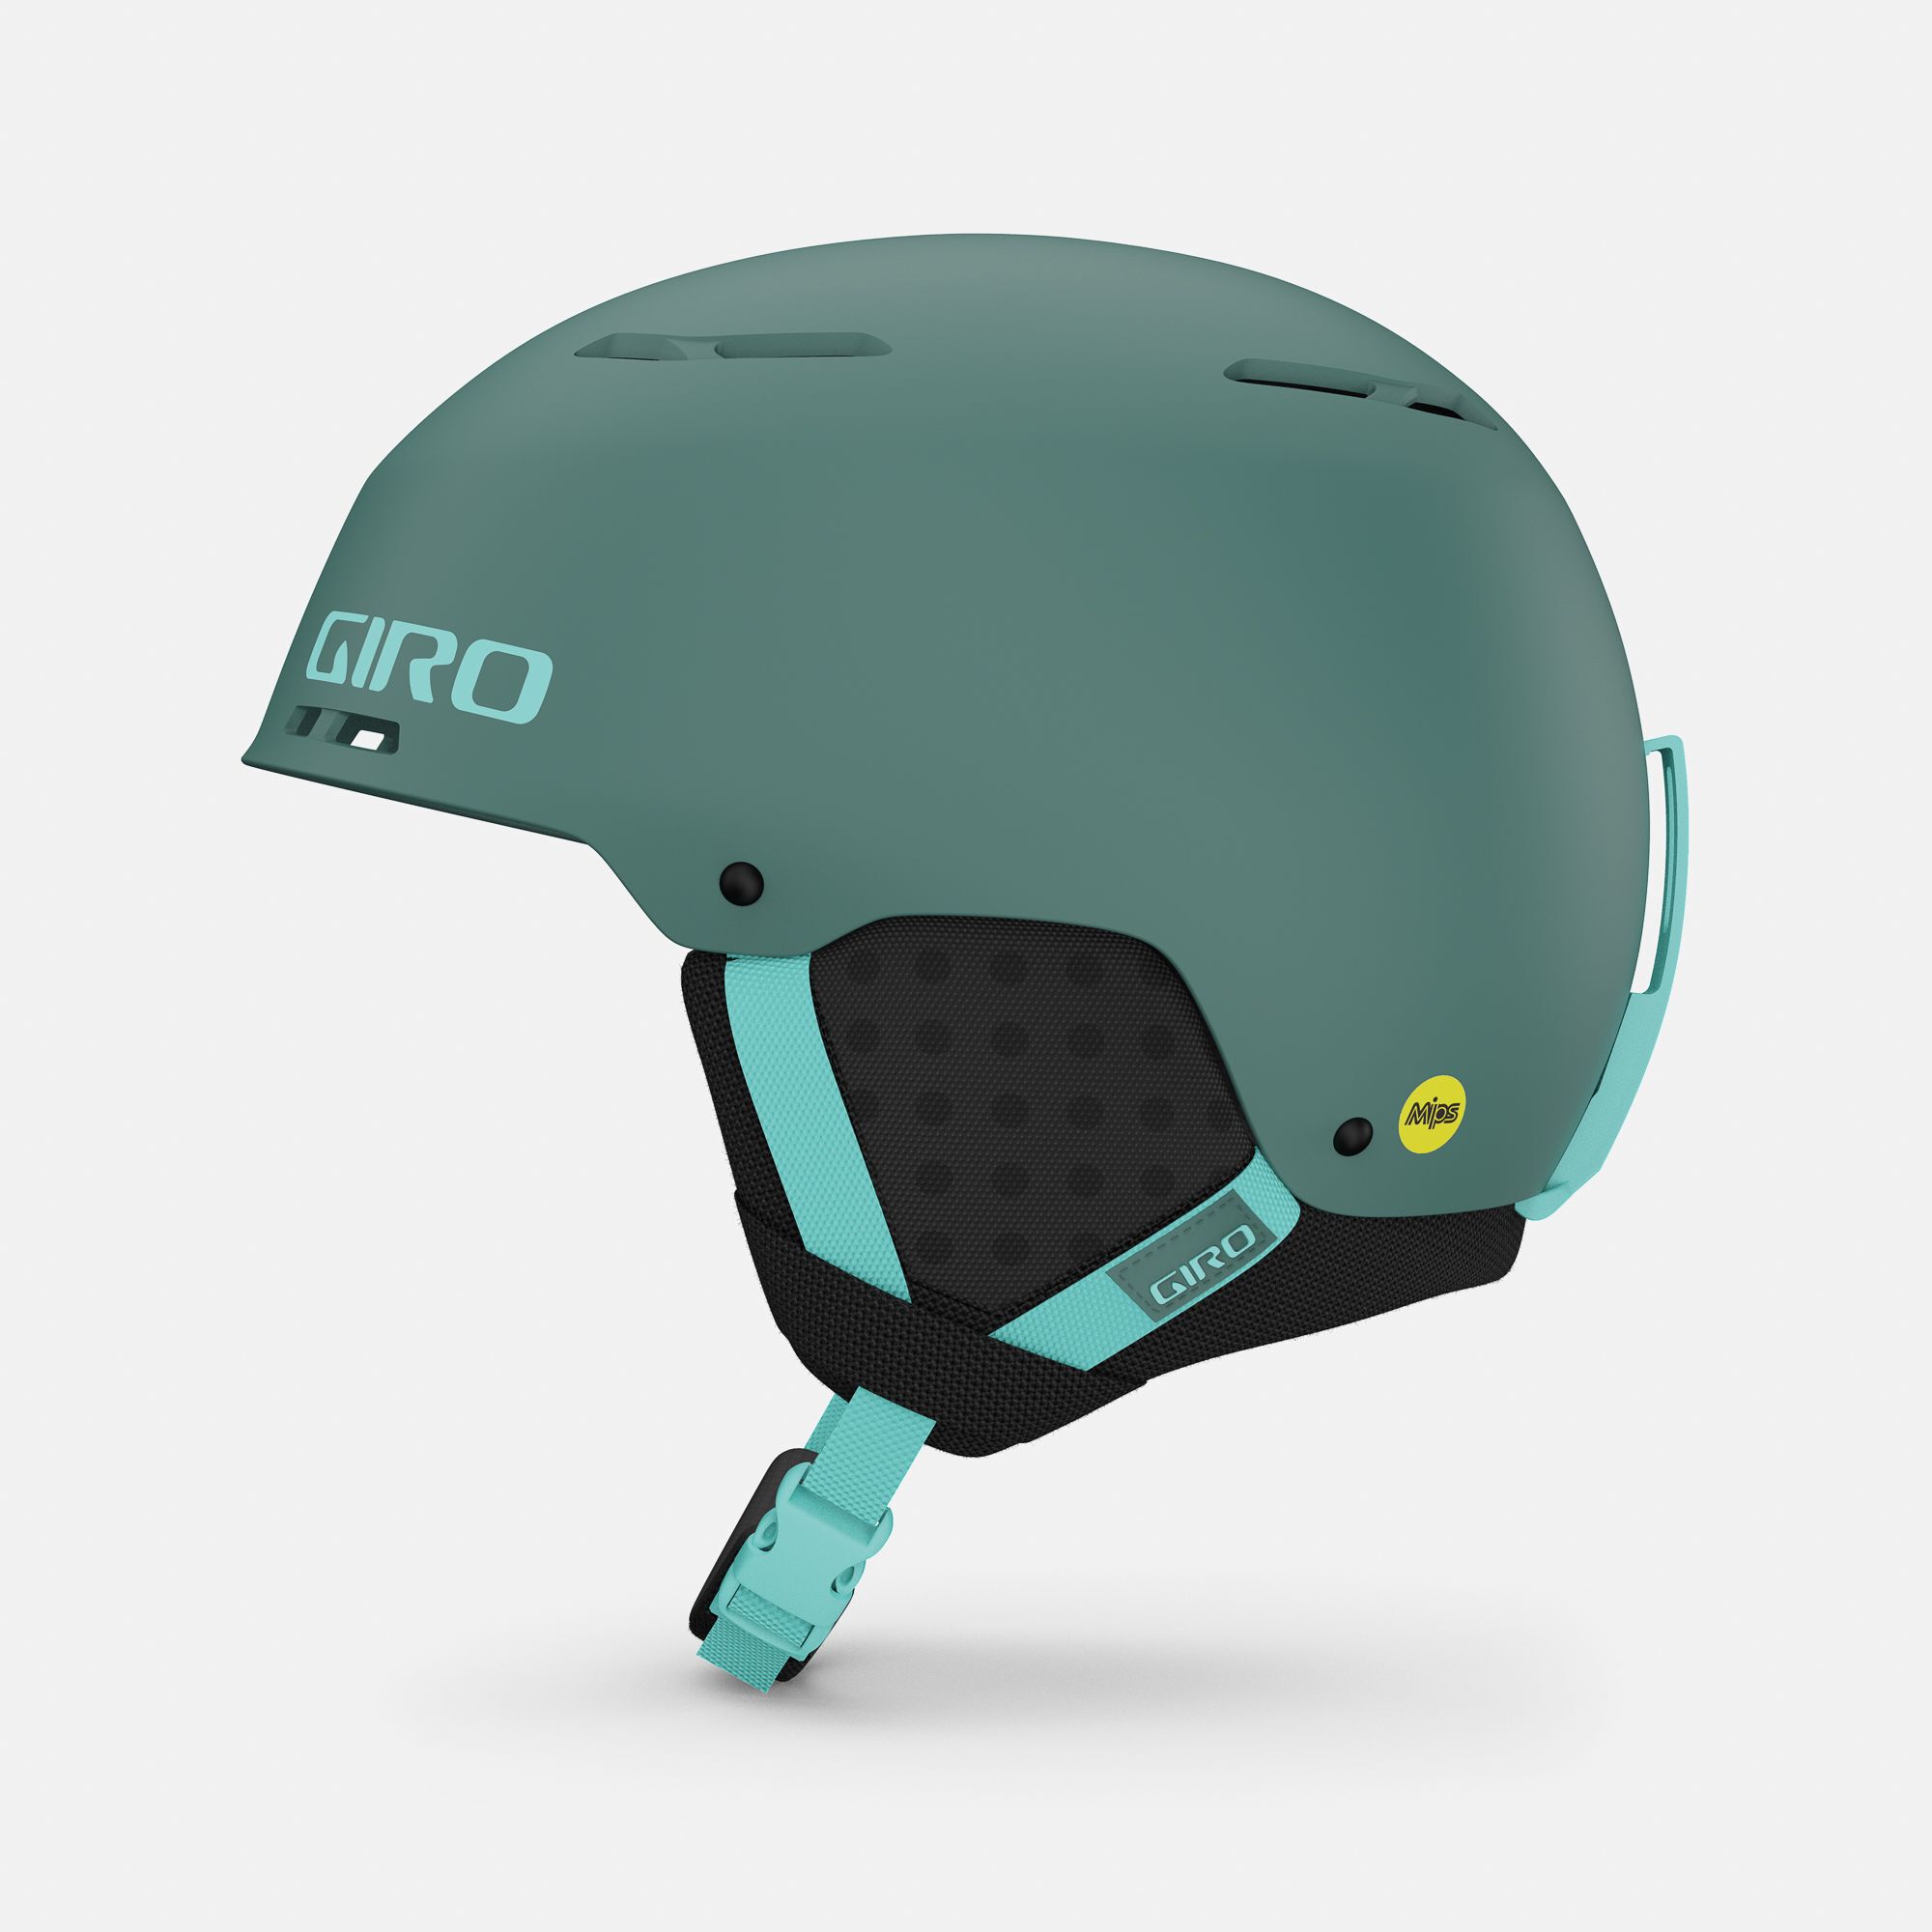 Details about   Giro sheer helmet Damen ski snowboard helmet ski snowboard-Helm new show original title 